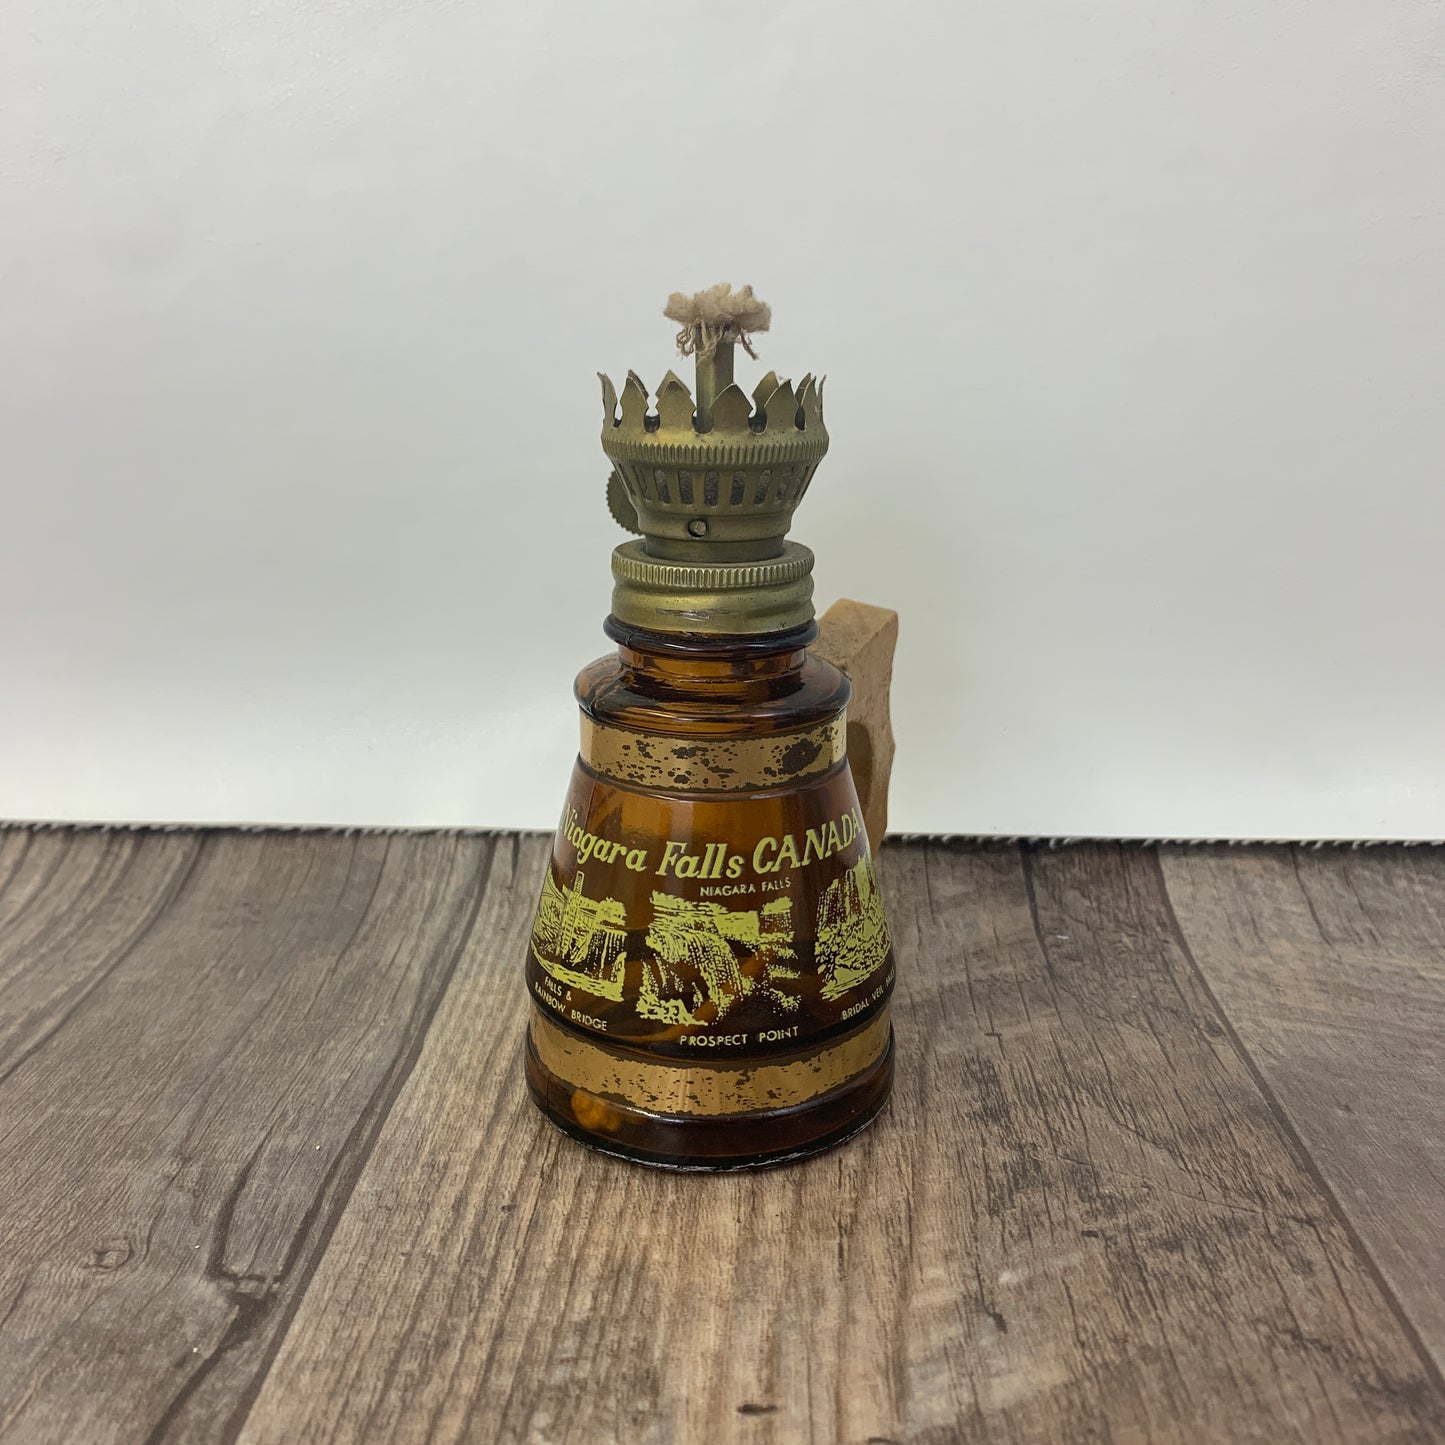 Vintage Niagara Falls Mini Oil Lamp Souvenir, Amber Glass Oil Lamp